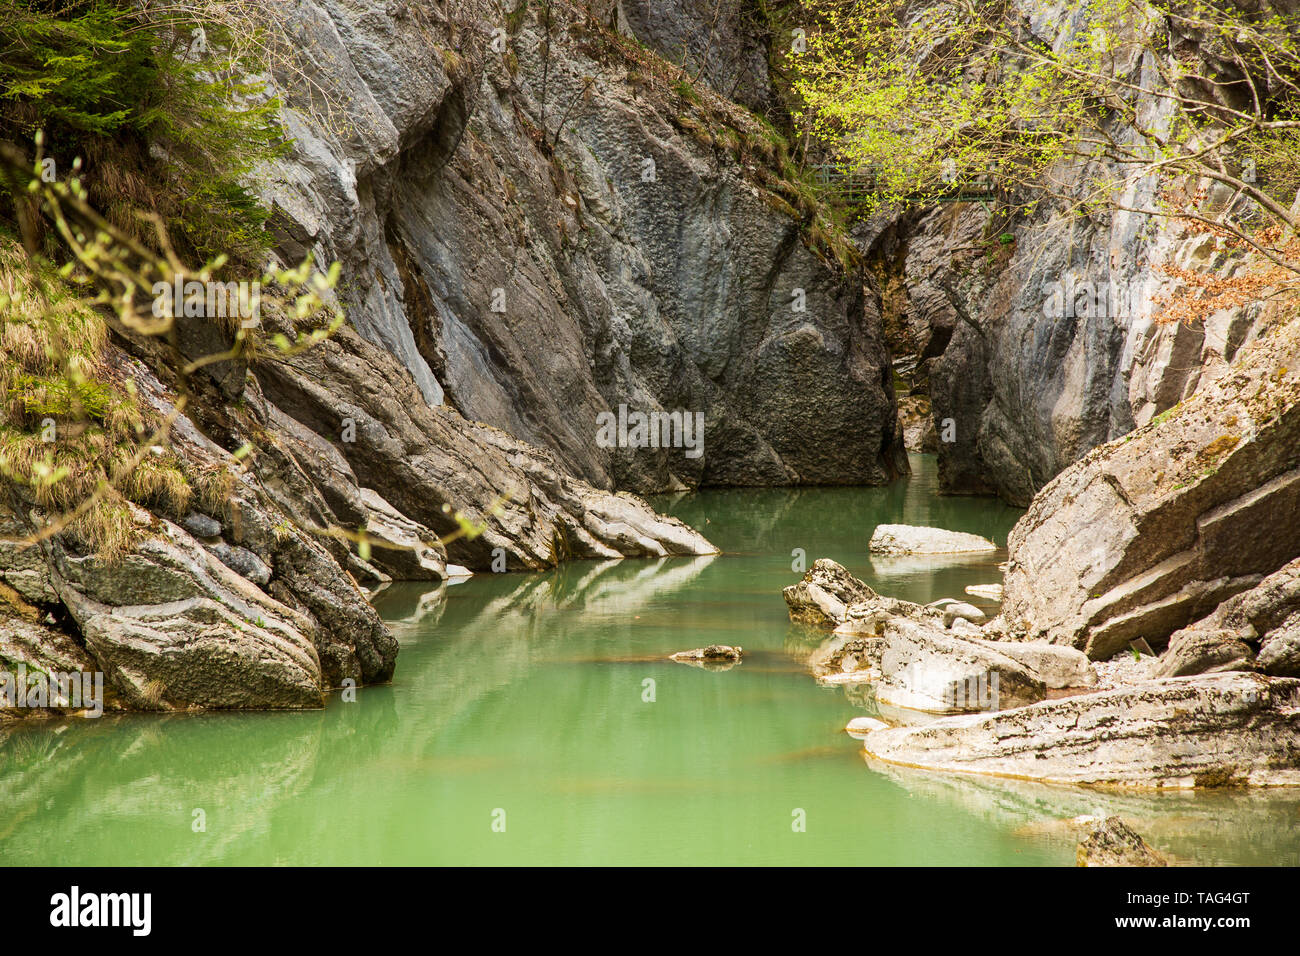 Gorges de la Jogne River Canyon in Broc, Schweiz Stockfoto